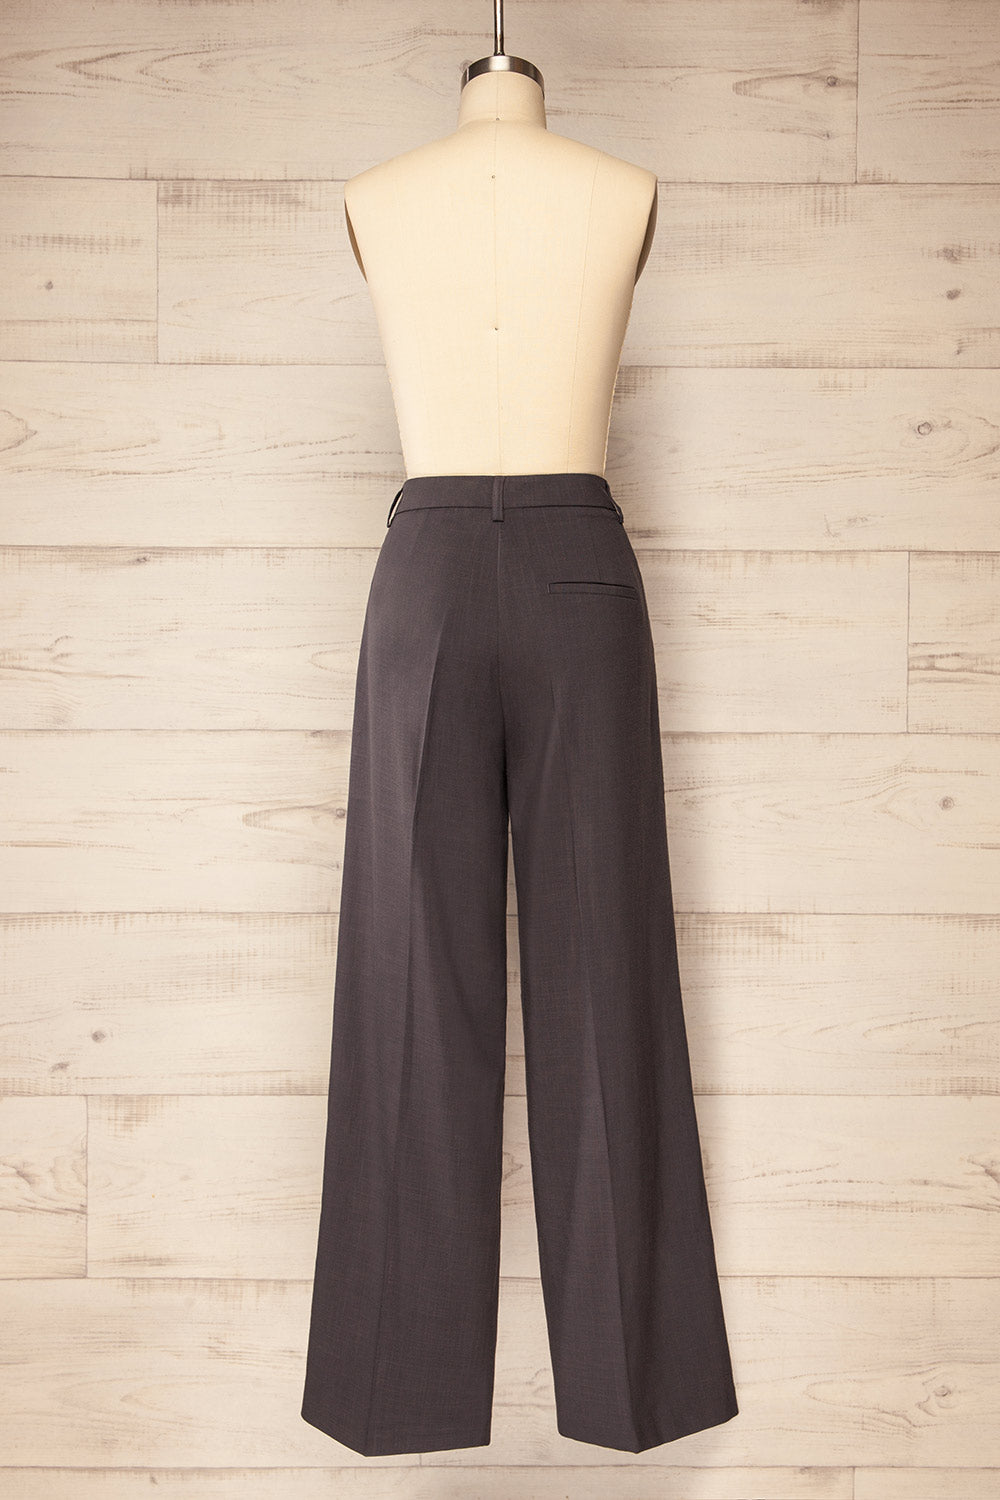 Bancroft Grey Oversized Pants w/ Front Pleats | La petite garçonne back view